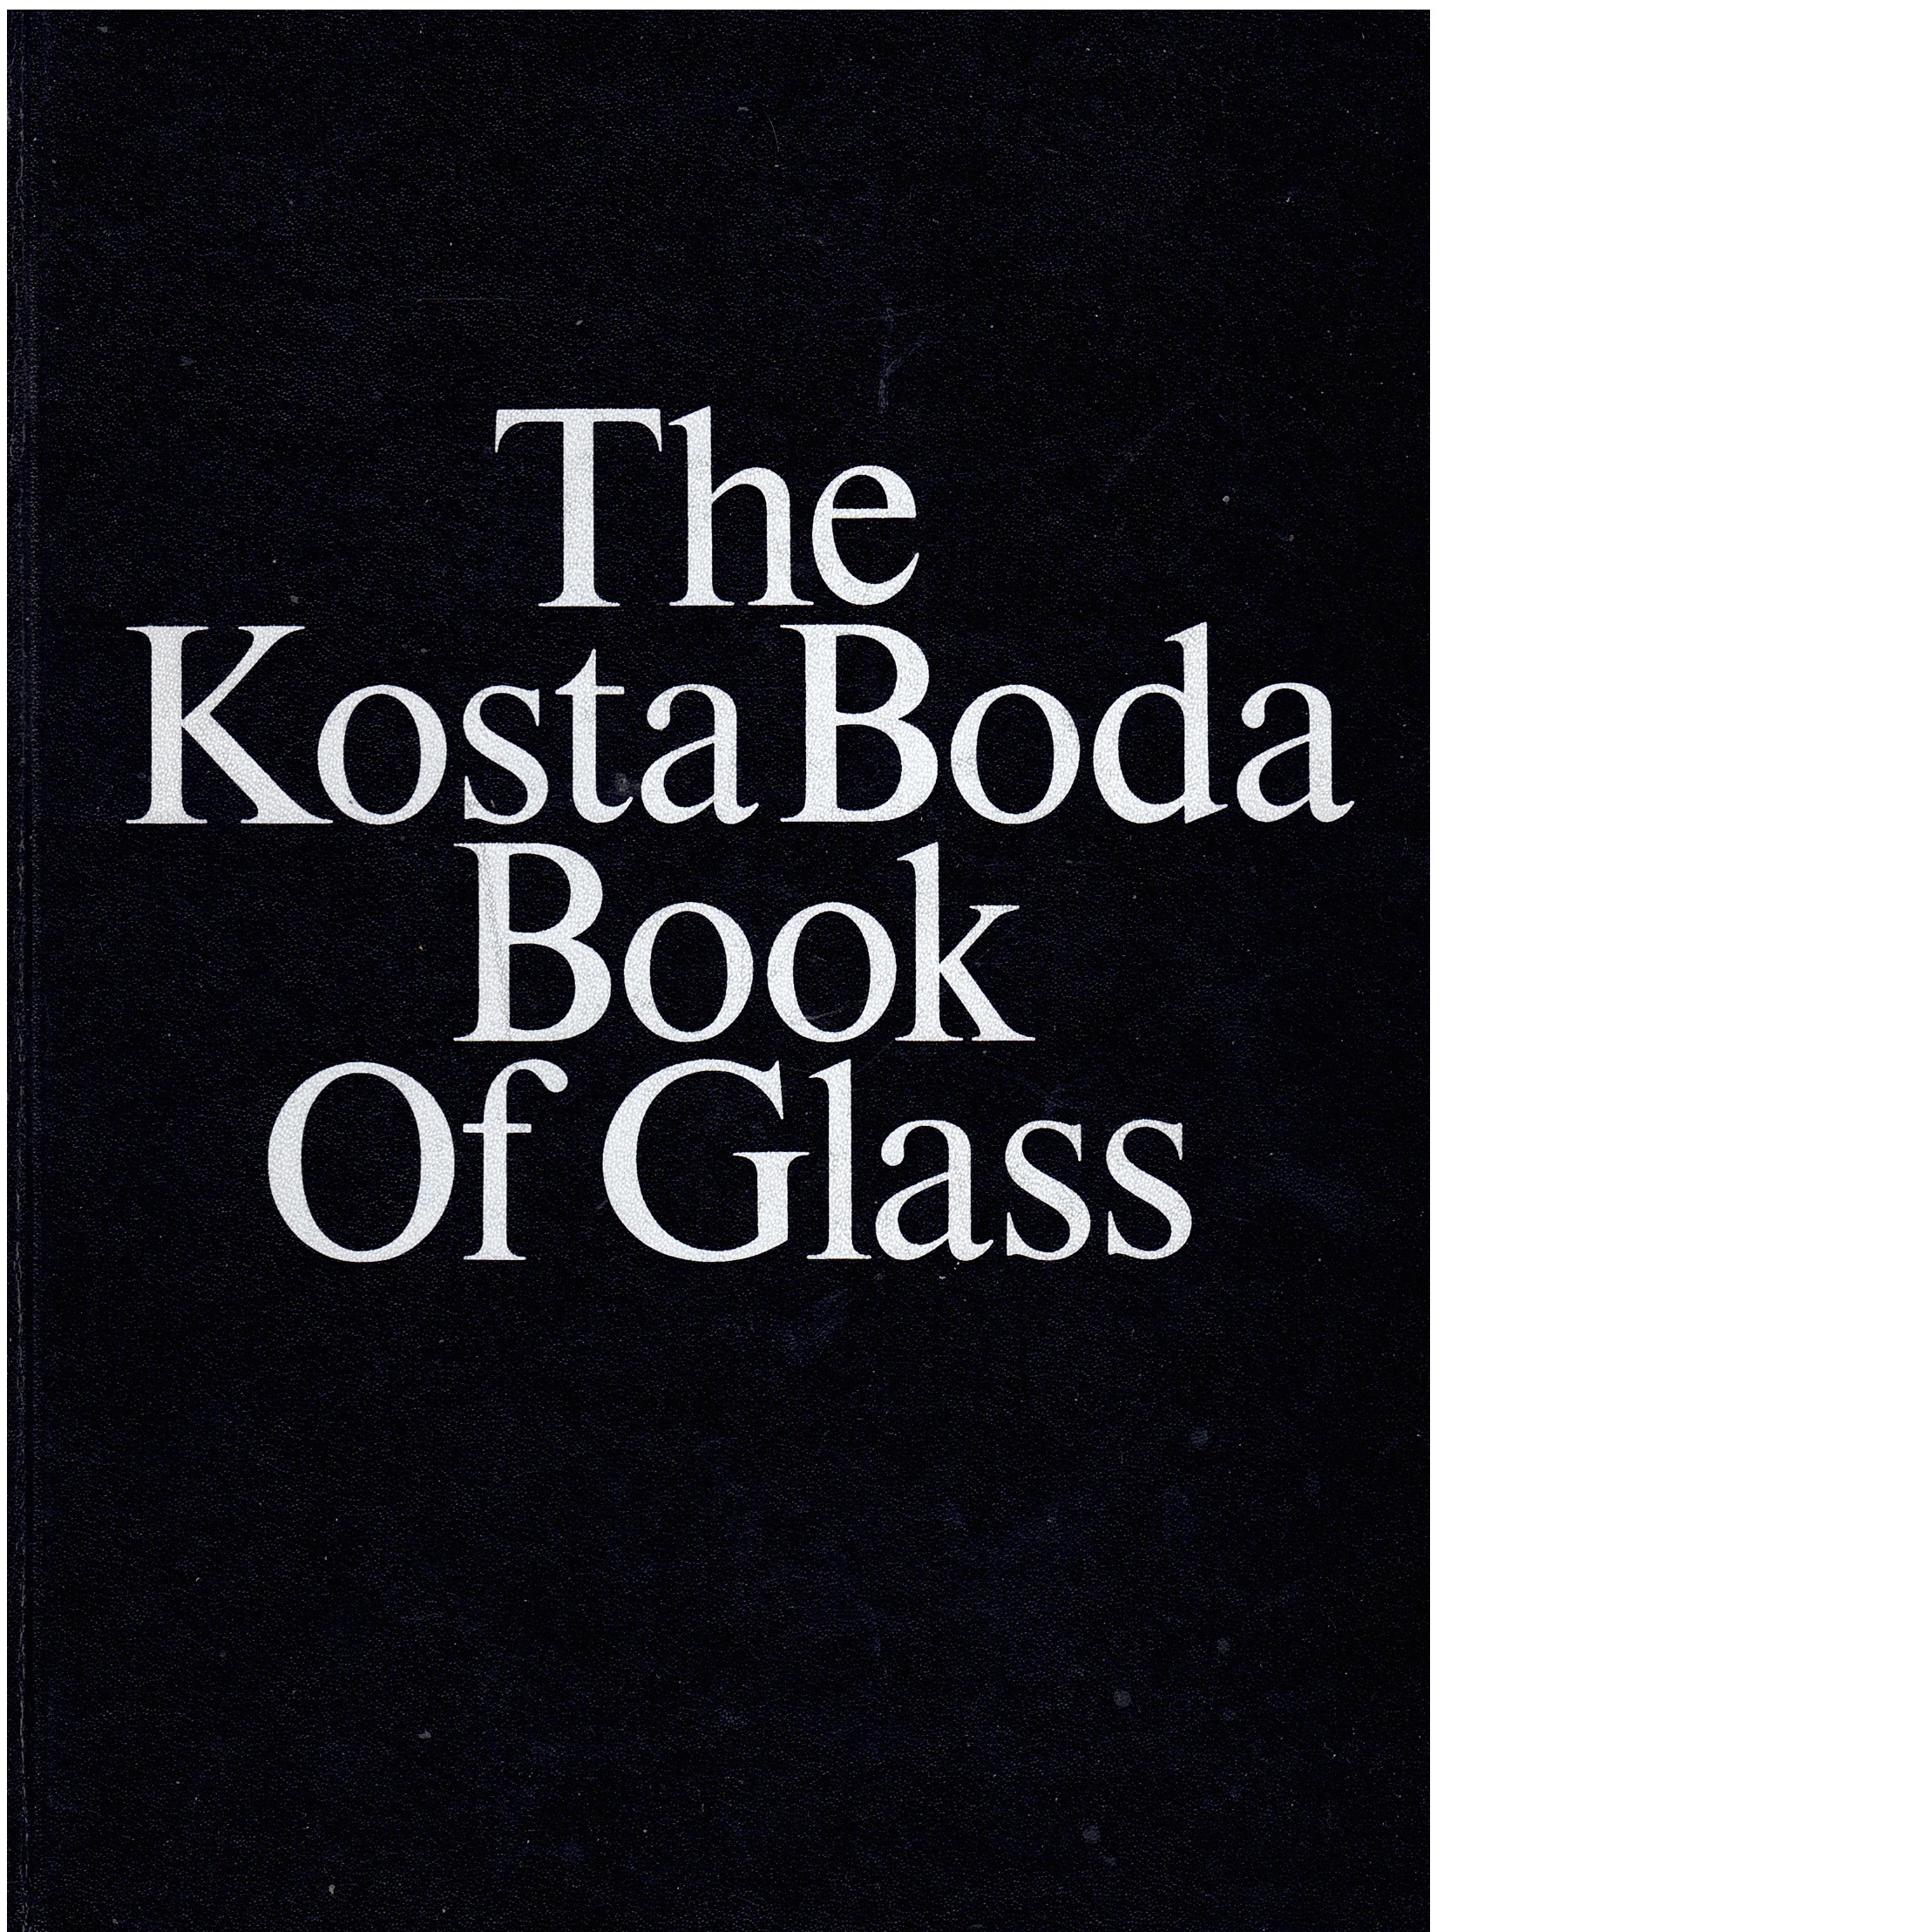 The Kosta Boda book of glass - Kosta Boda